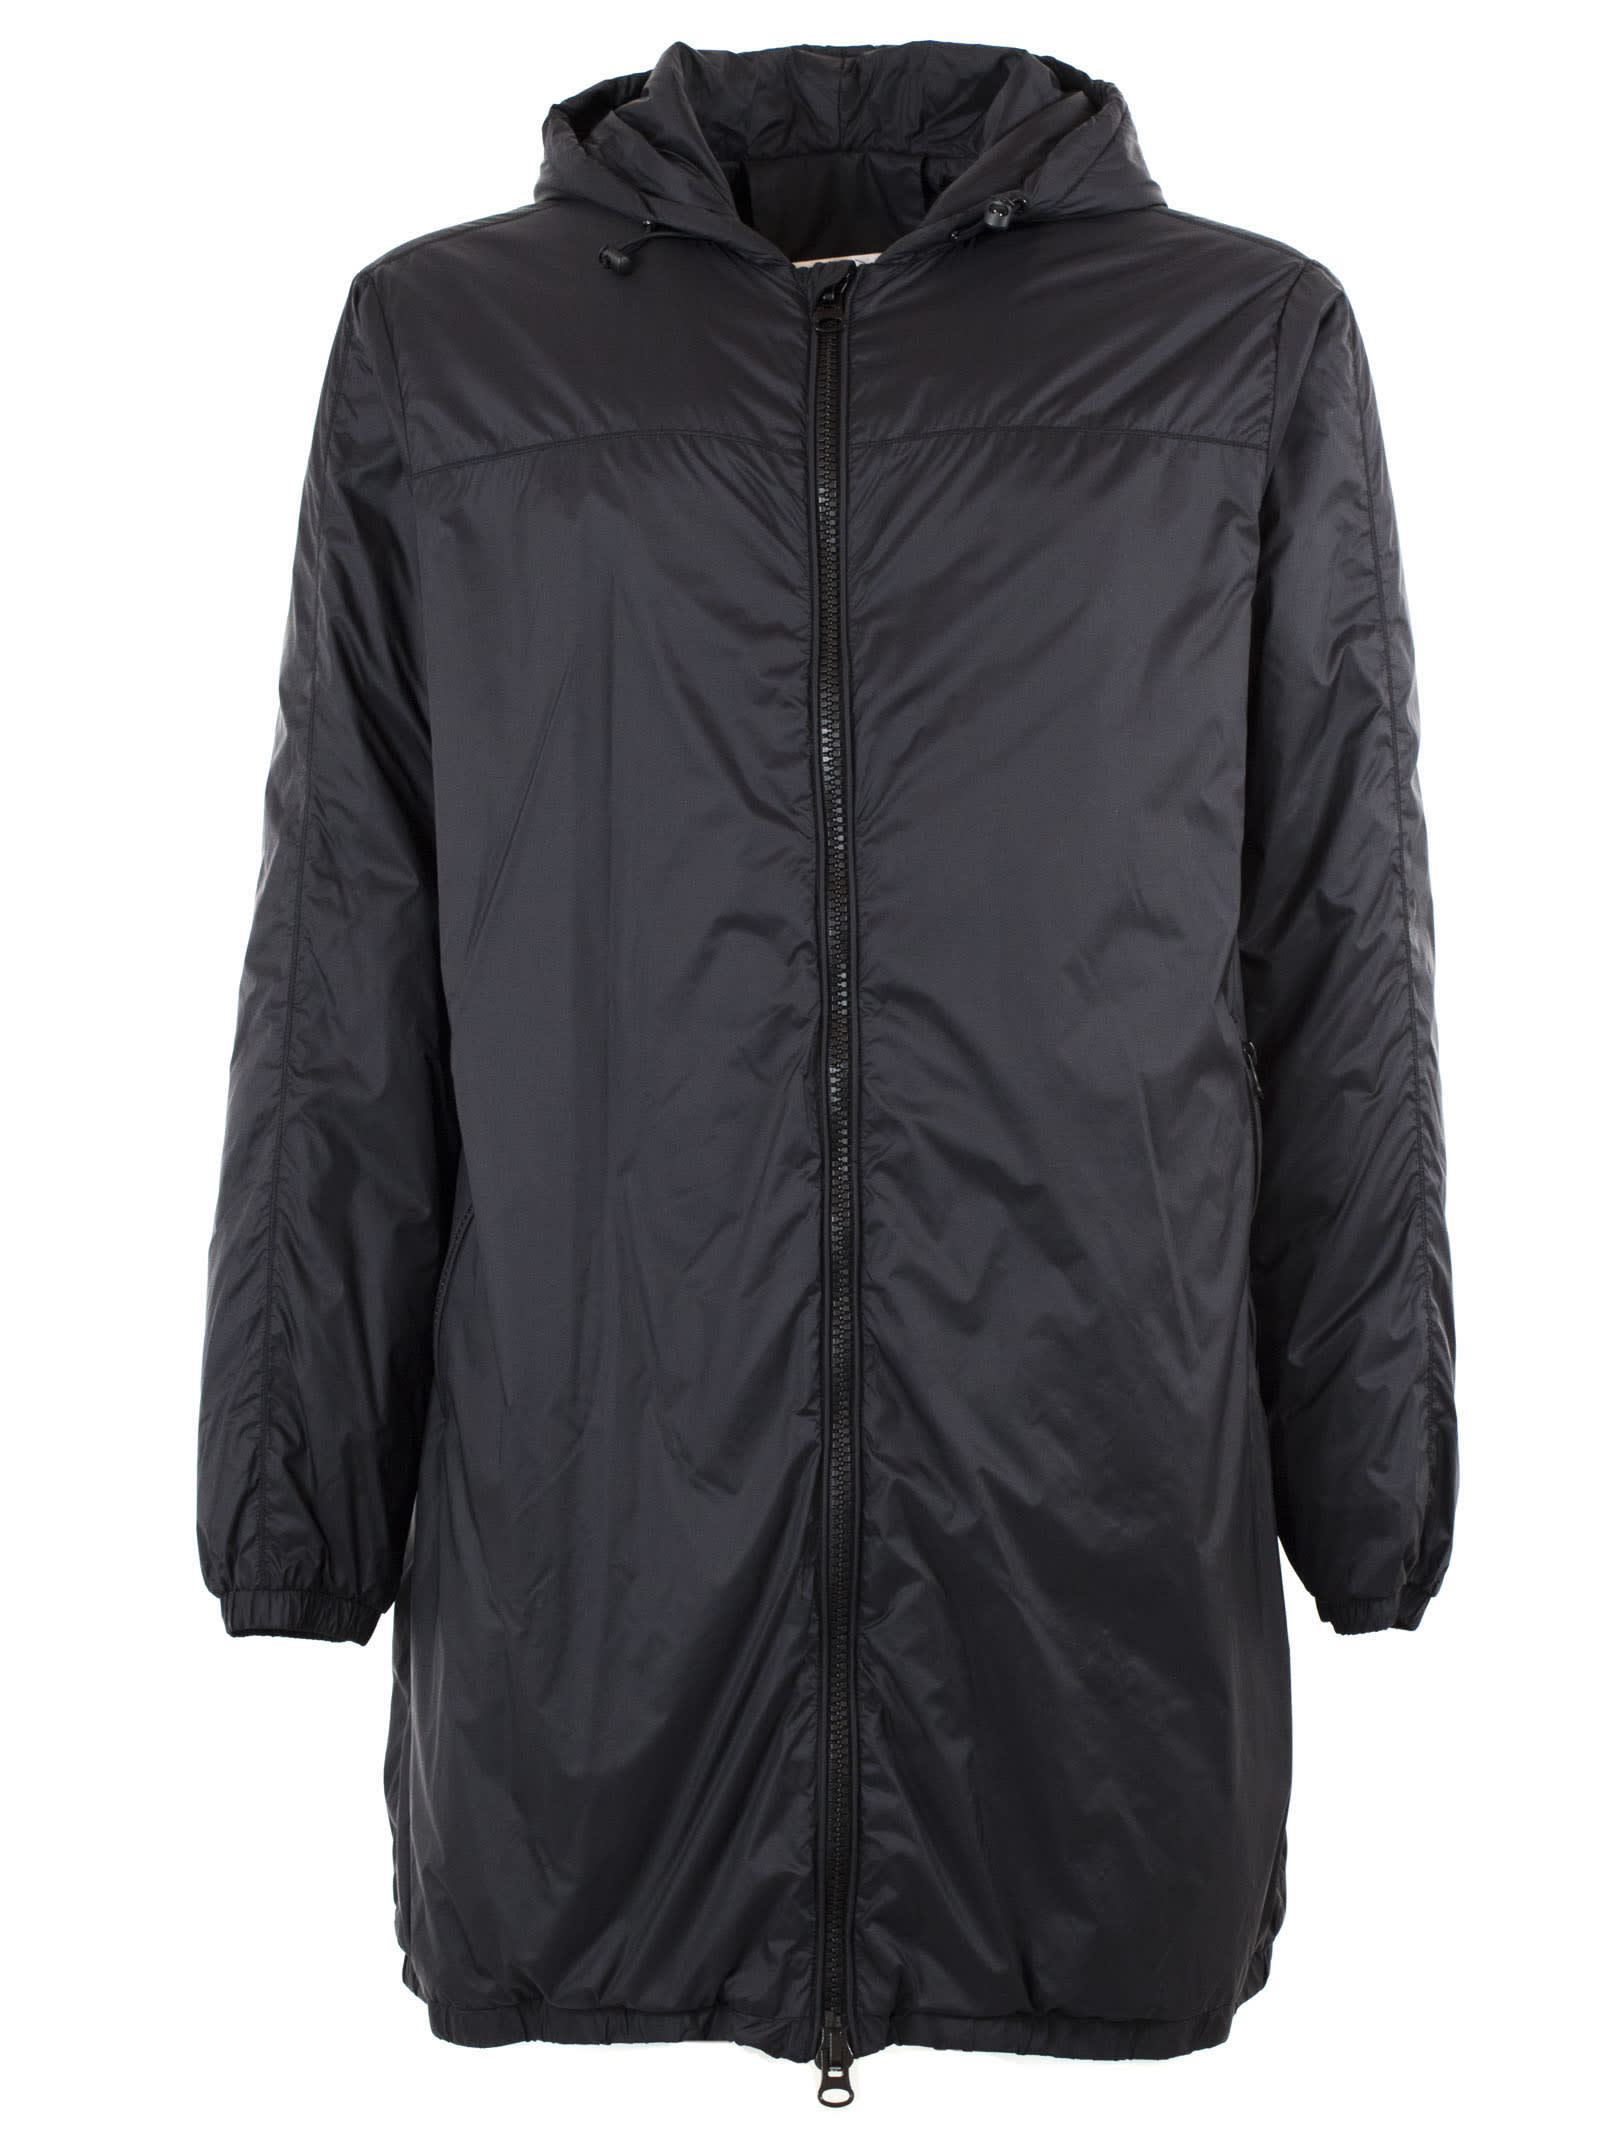 Mauro Grifoni Waterproof Black Fabric Jacket